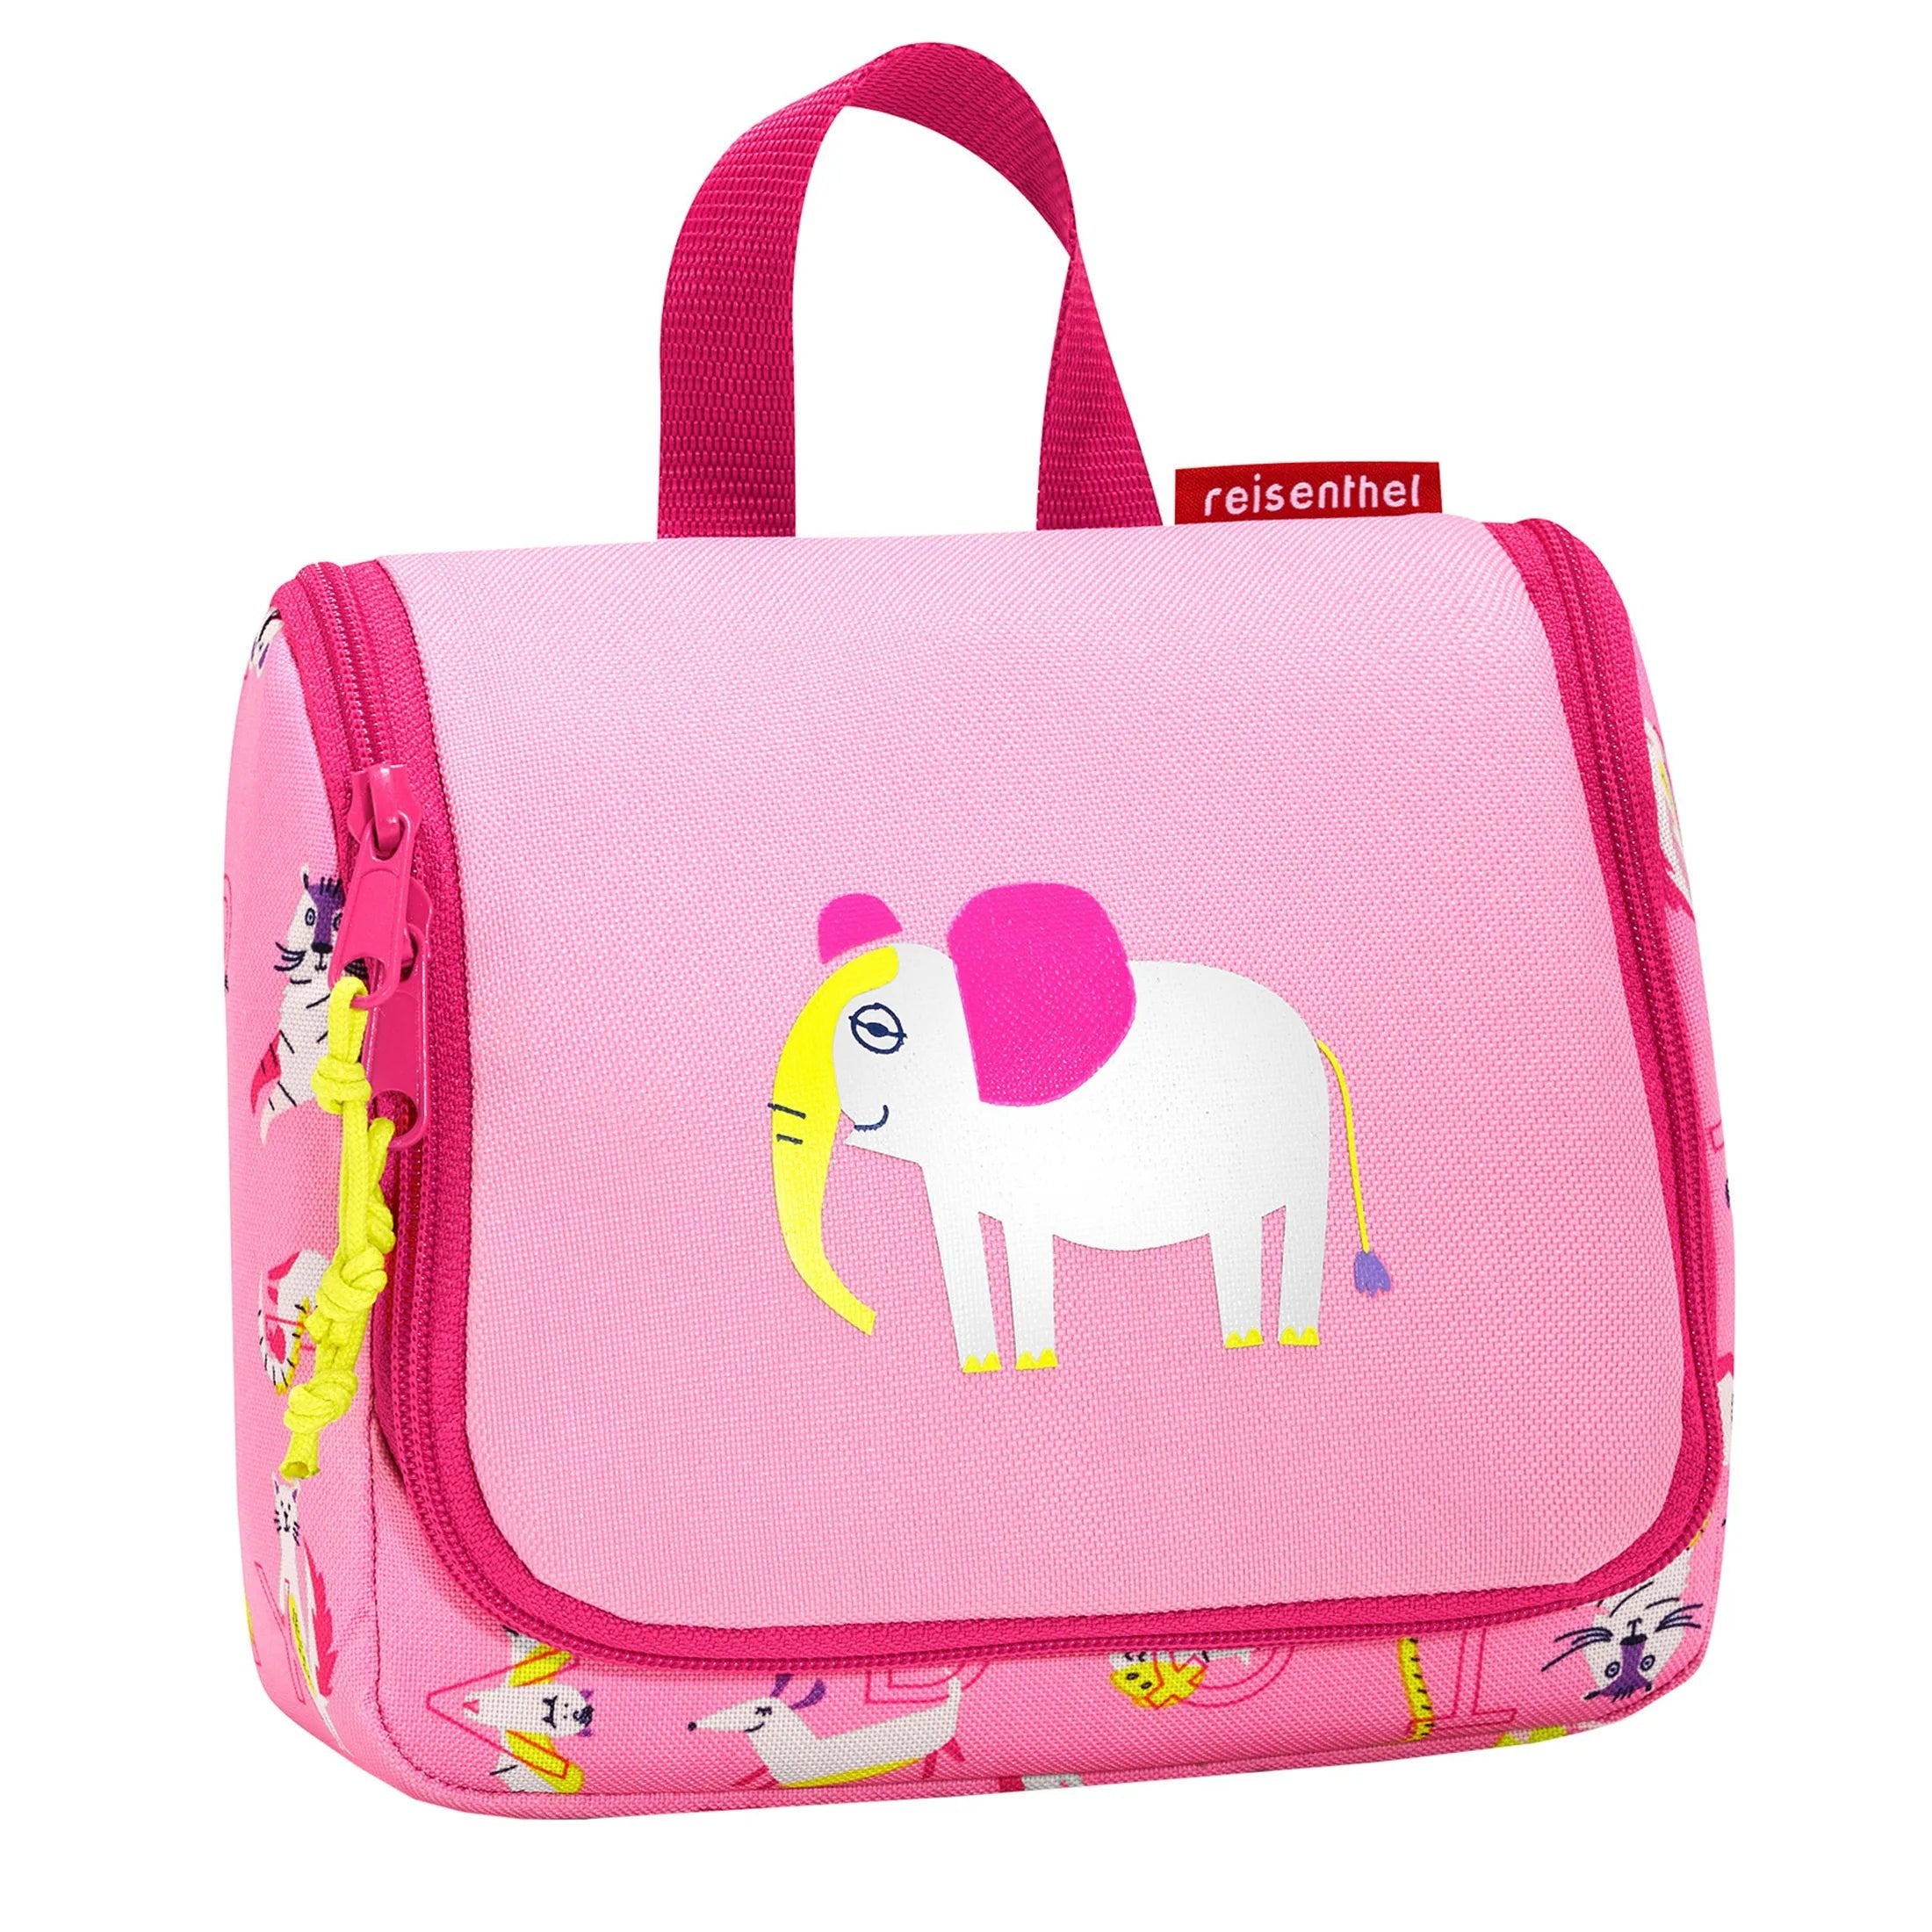 Reisenthel Kids Toiletbag S wash bag 18 cm - friends pink